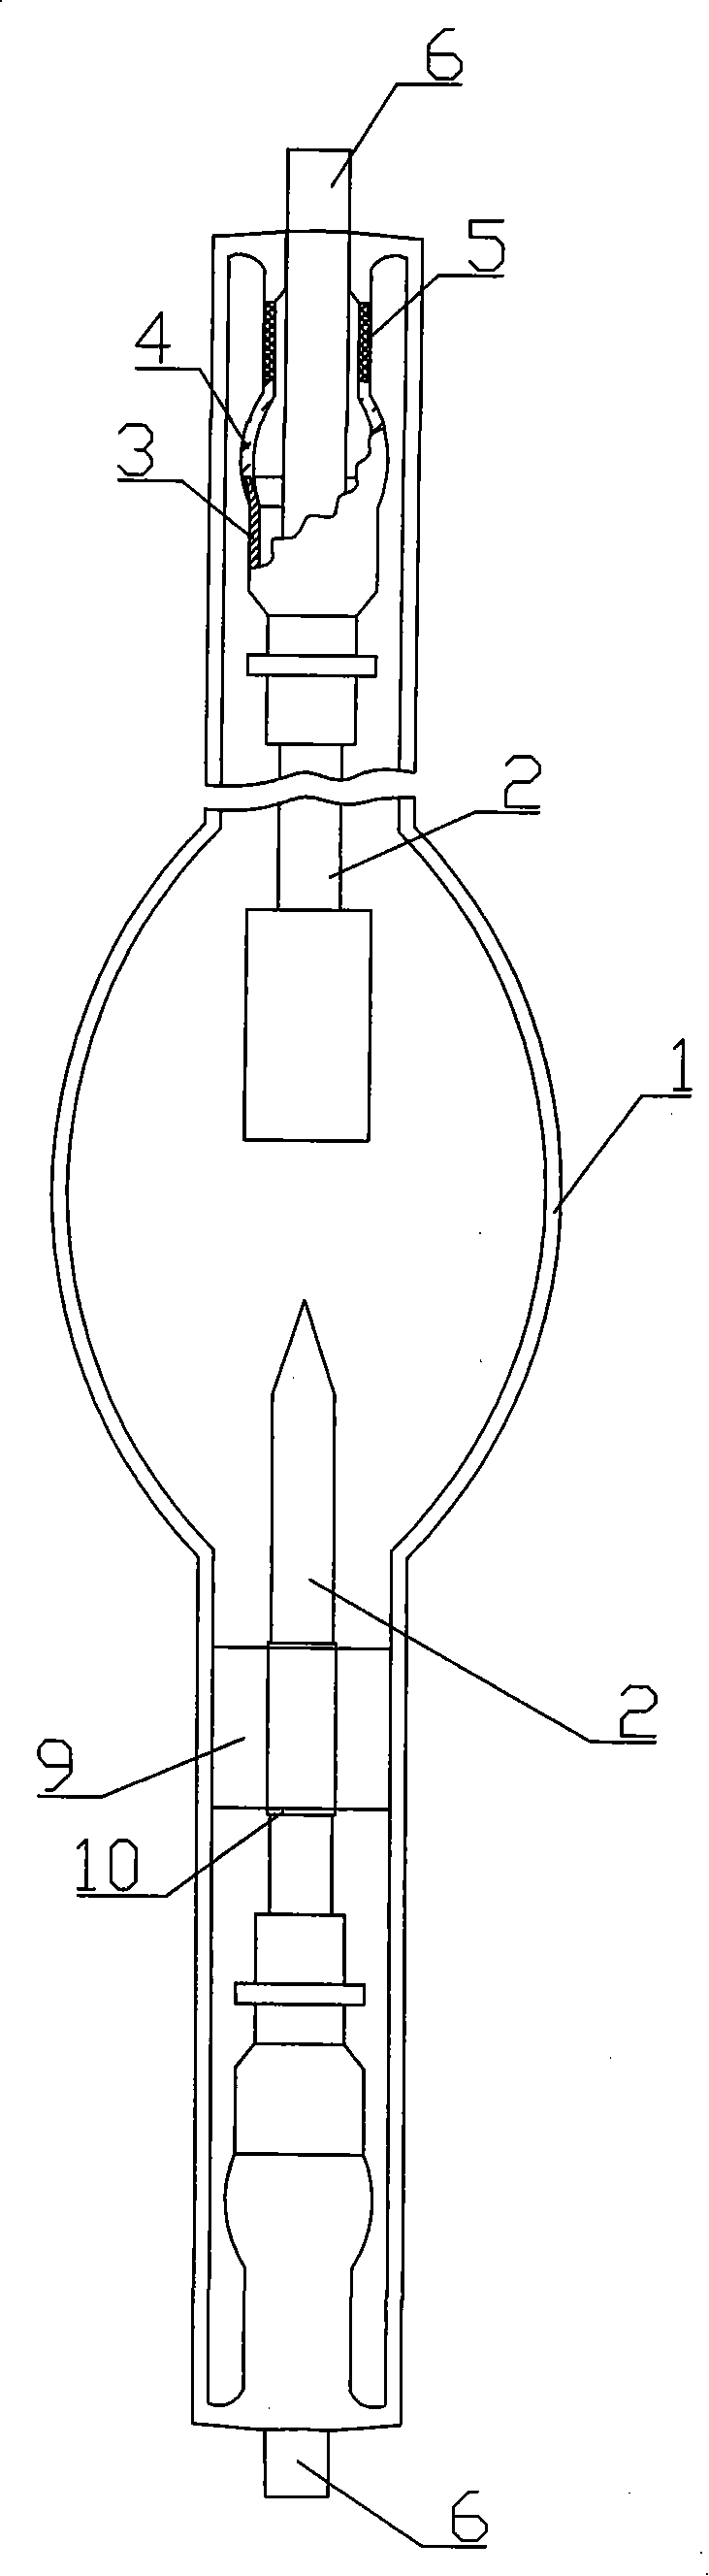 Transition sealing-in type xenon lamp